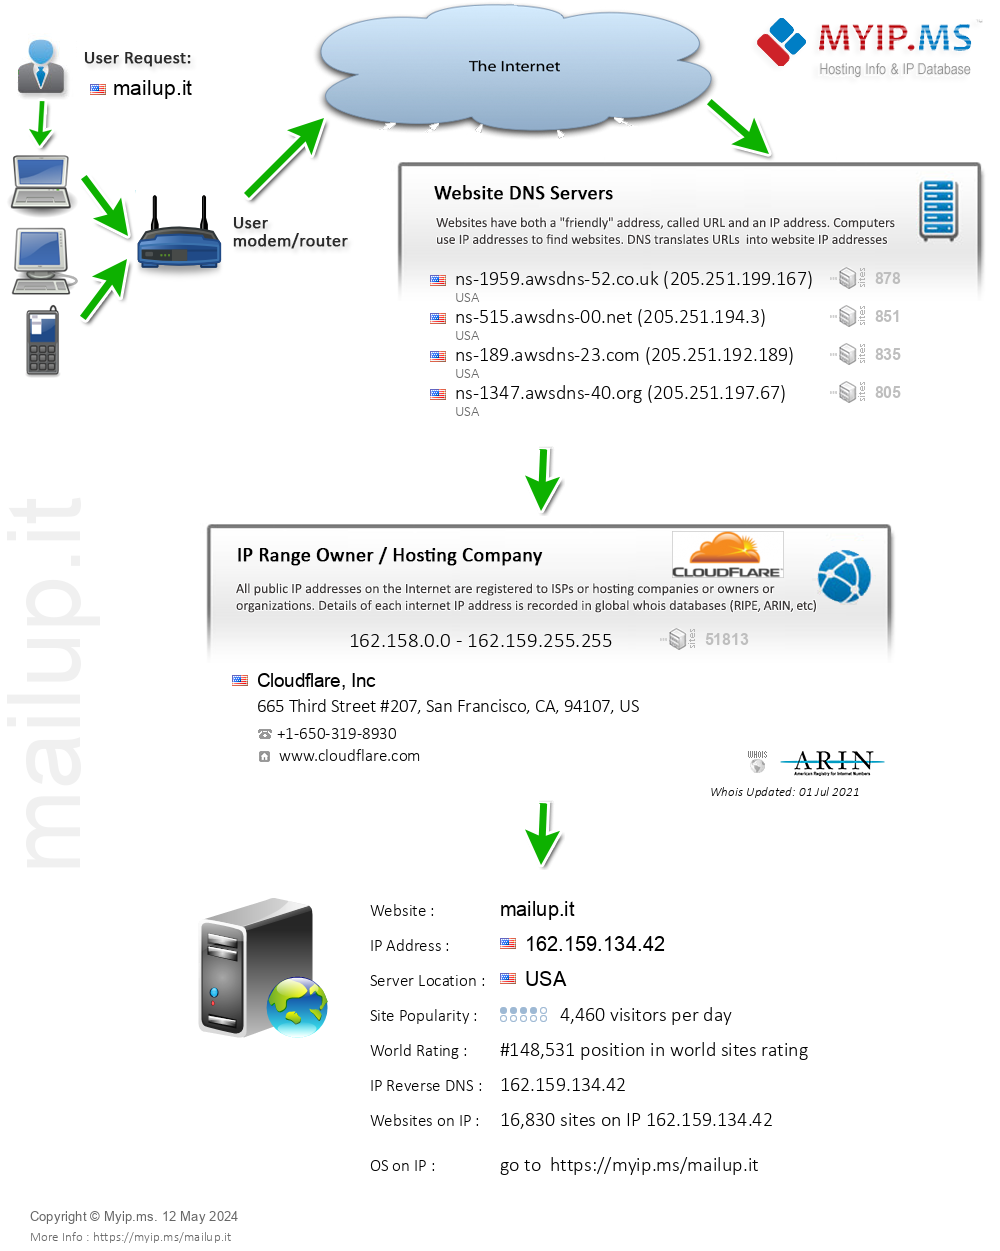 Mailup.it - Website Hosting Visual IP Diagram